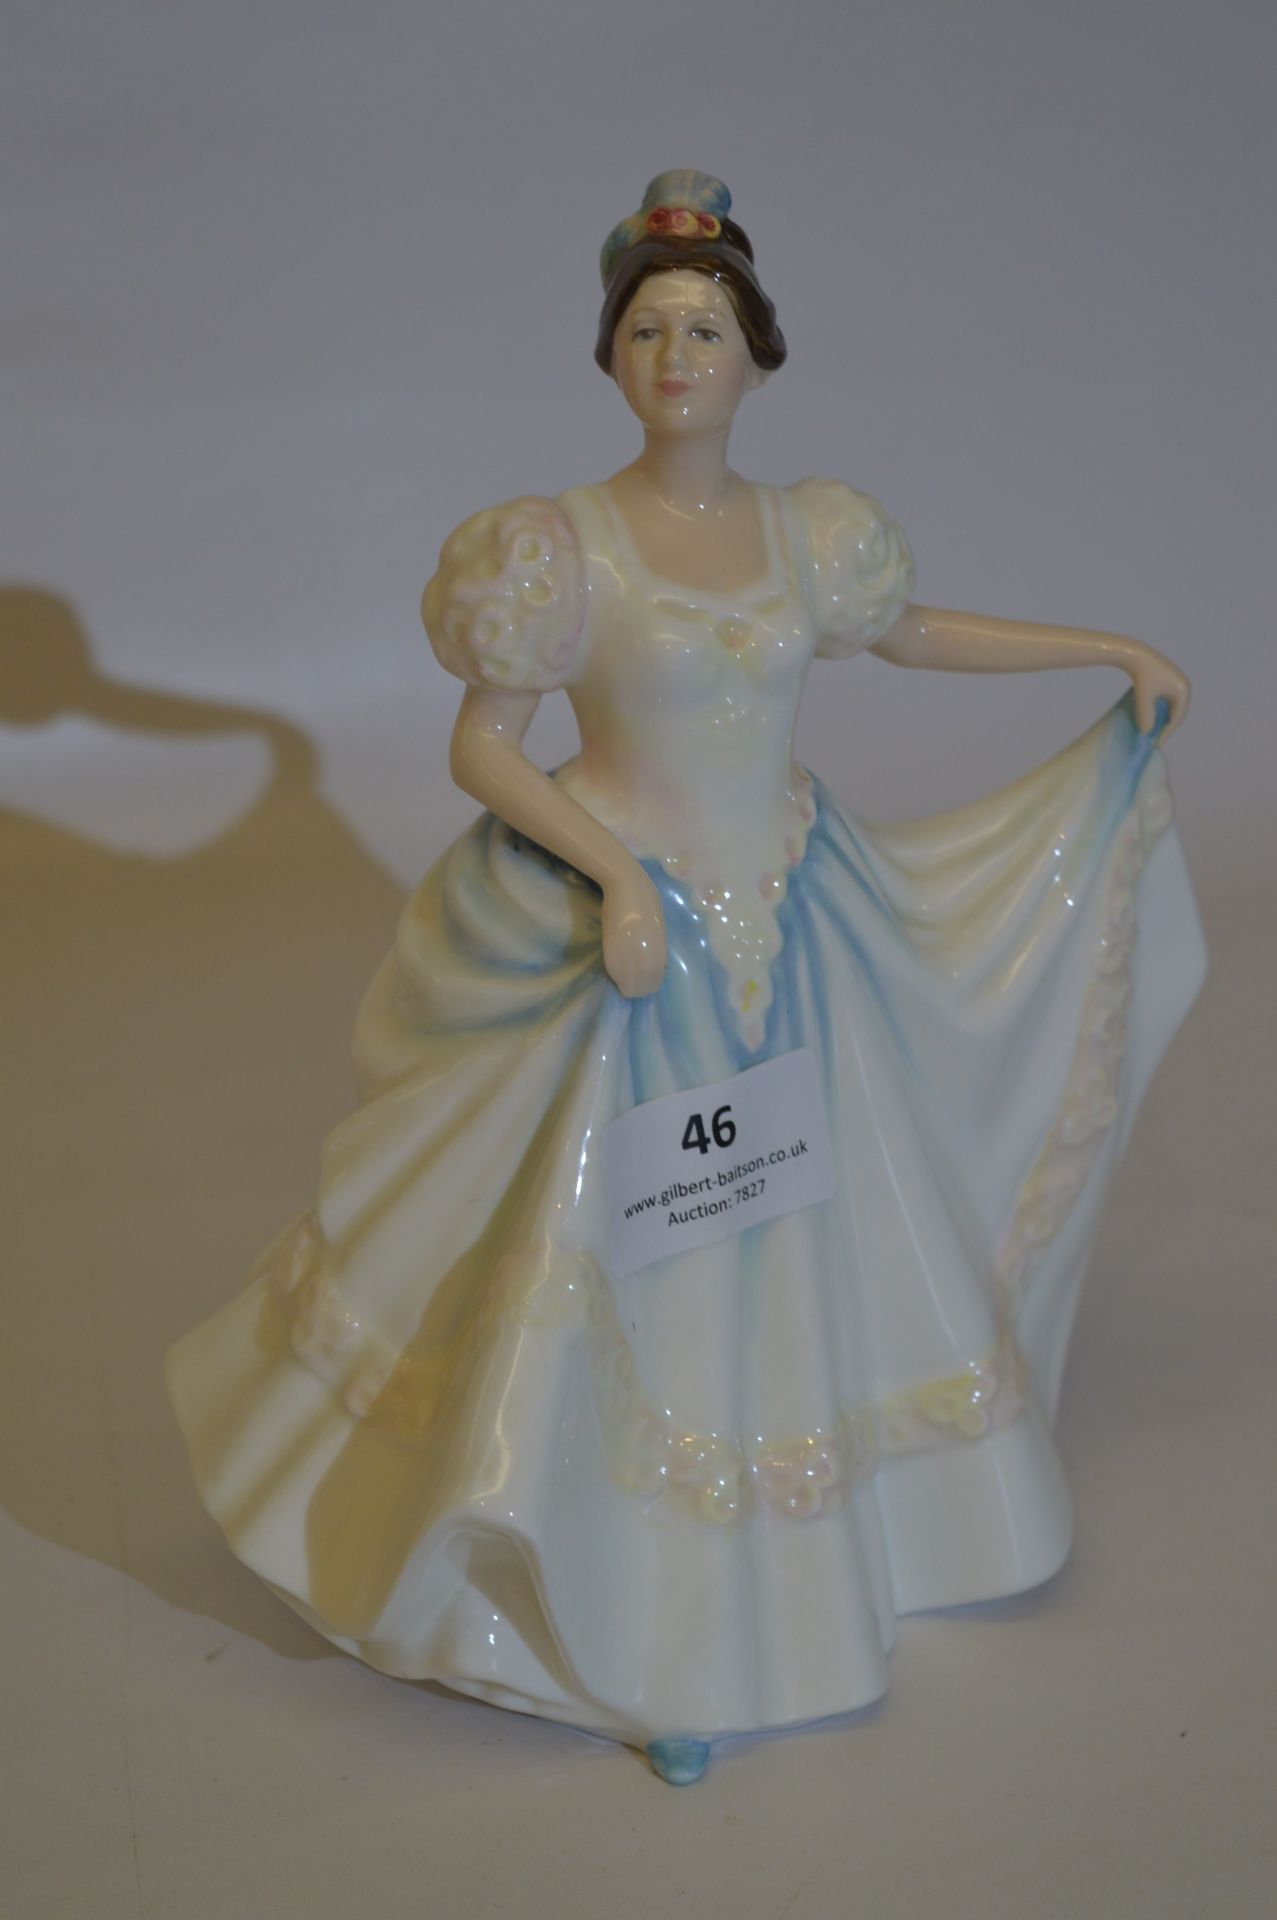 Royal Doulton Figurine "Lindsay" HN3645